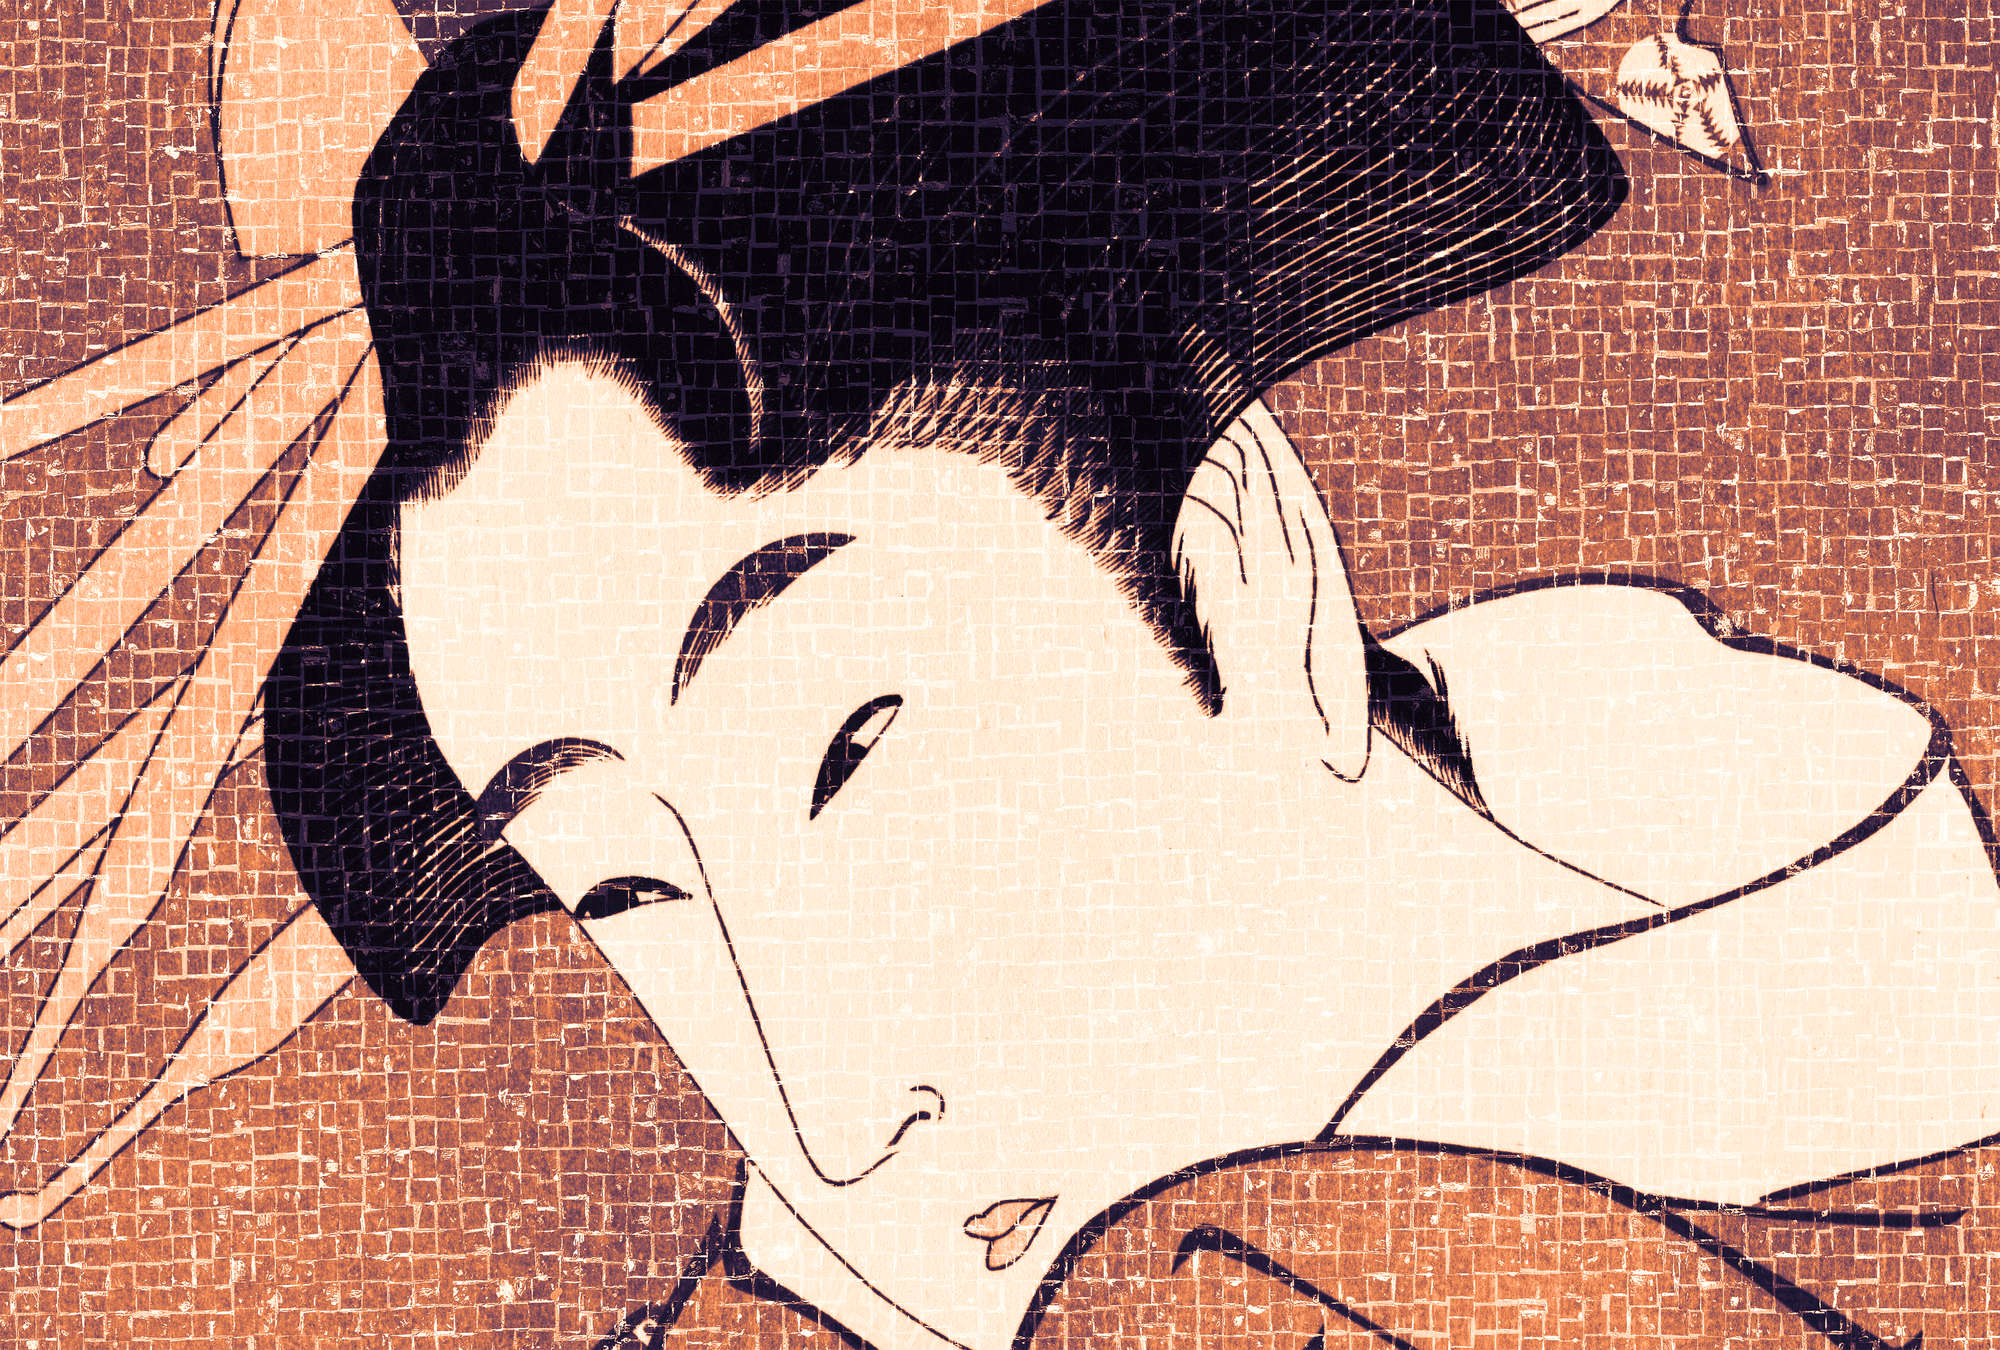             Fotomurali Samurai, design Asia in stile pixel - arancione, crema, nero
        